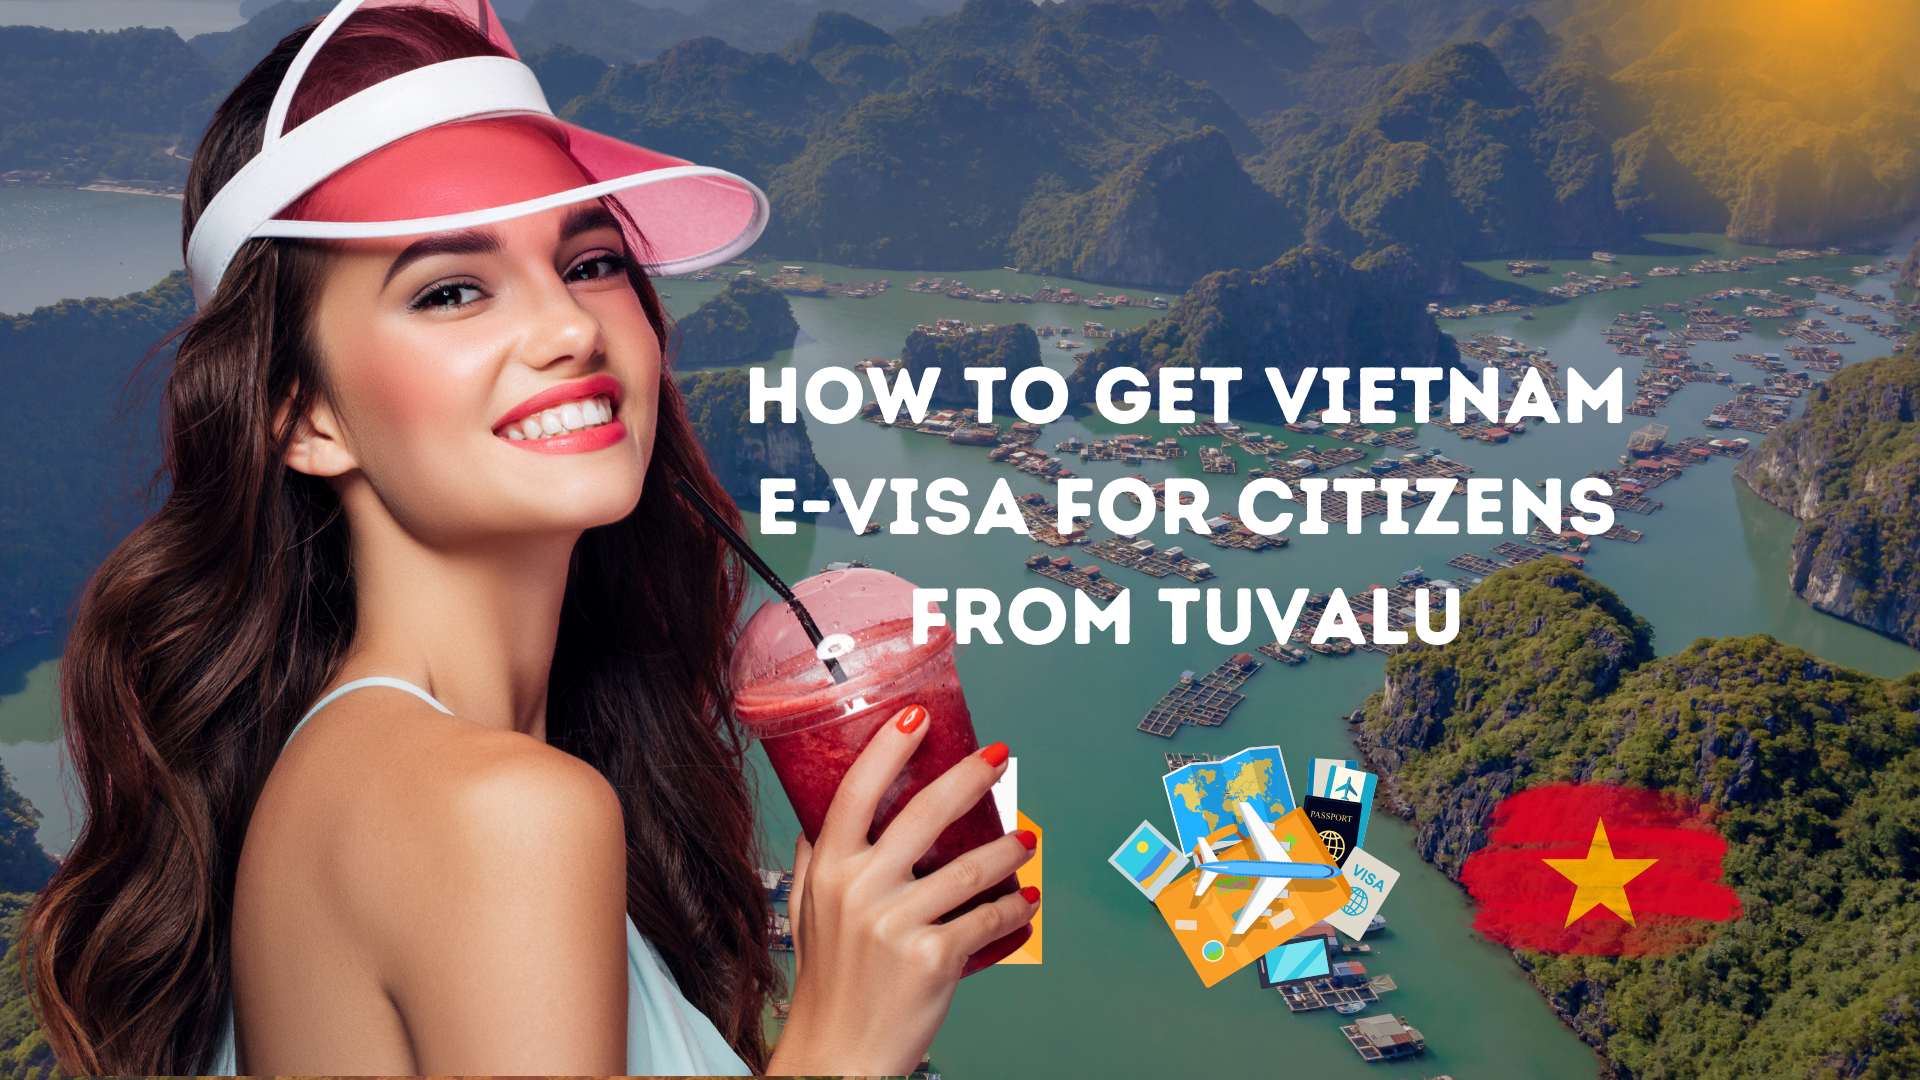 Vietnam Evisa for Citizens from Tuvalu